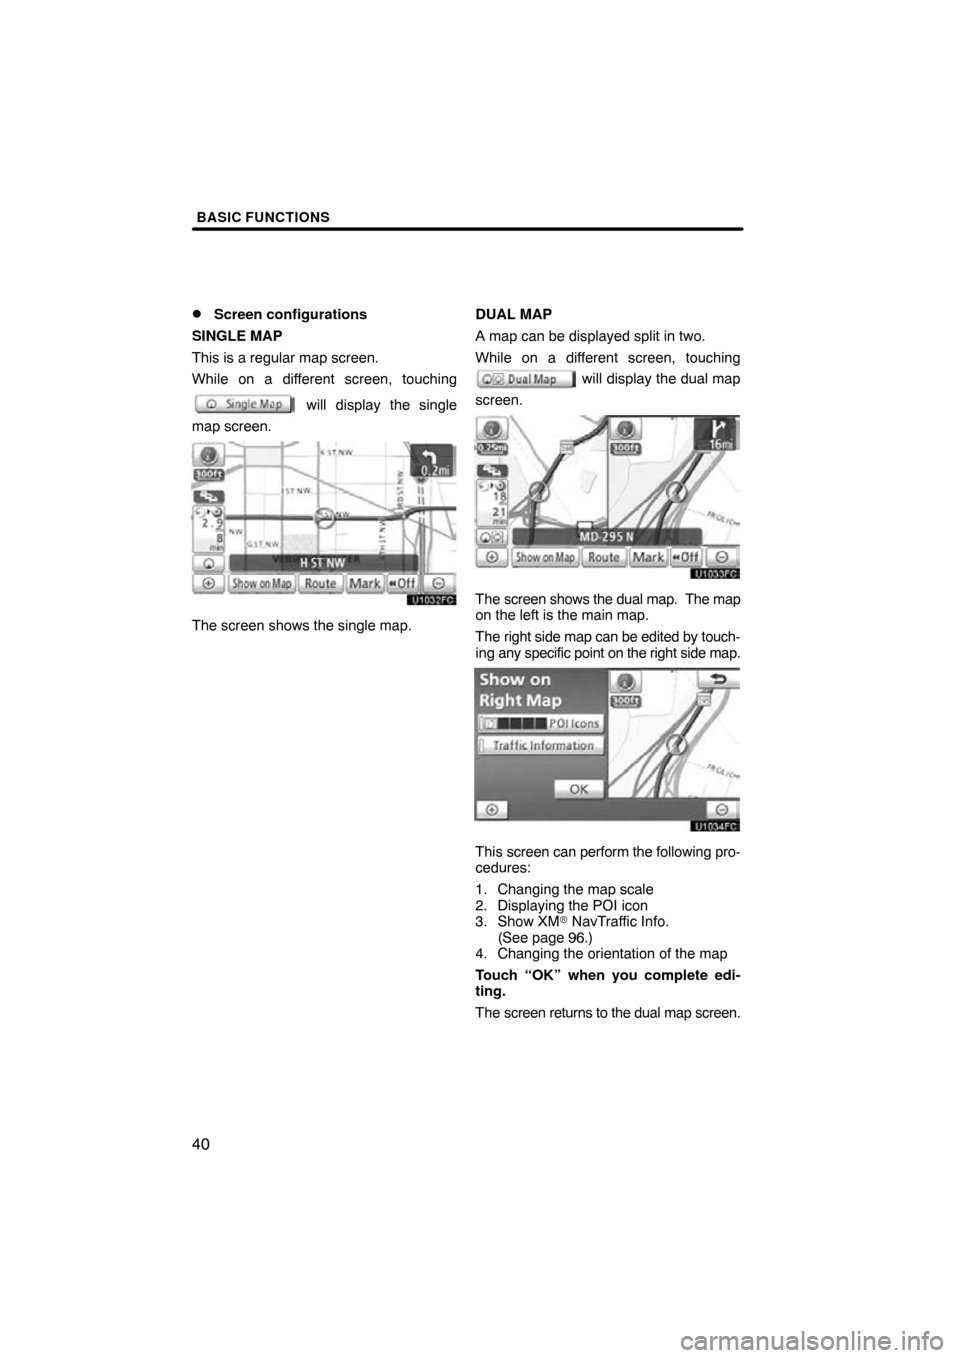 TOYOTA AVALON 2011 XX30 / 3.G Navigation Manual BASIC FUNCTIONS
40 
Screen configurations
SINGLE MAP
This is a regular map screen.
While on a different screen, touching
 will display the single
map screen.
The screen shows the single map. DUAL MAP